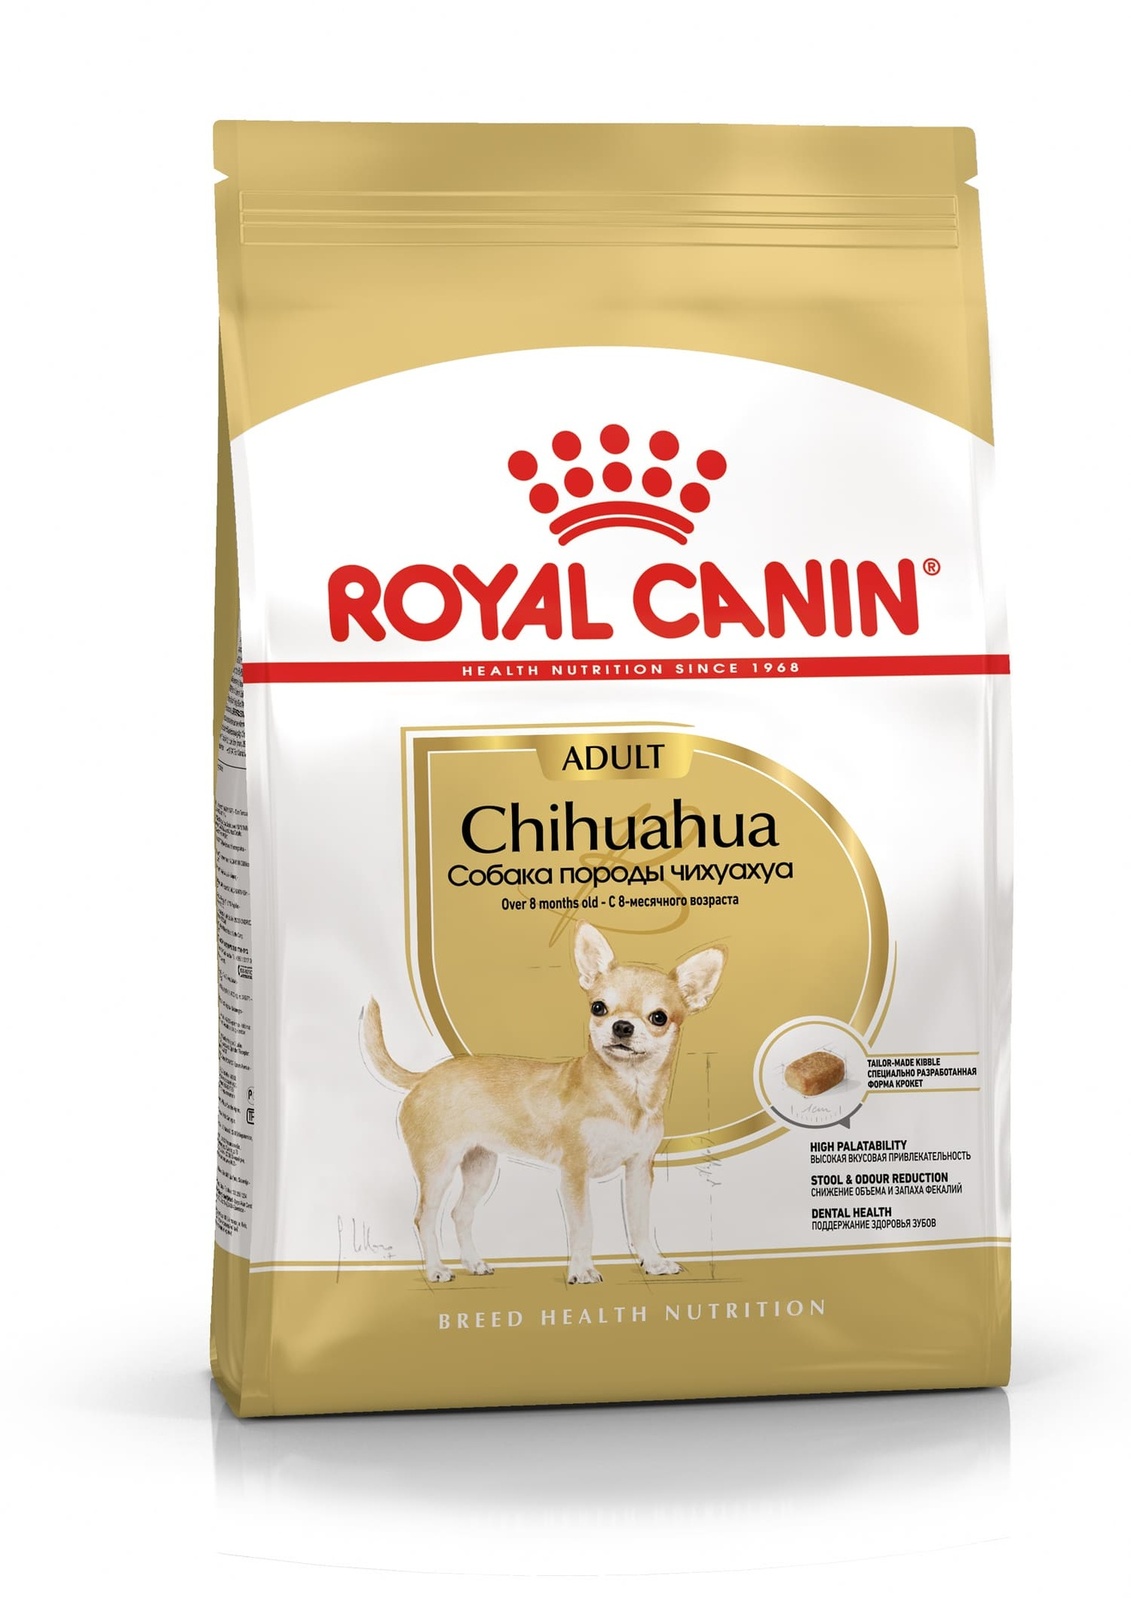 Royal Canin Royal Canin сухой корм для чихуахуа с 8 месяцев (500 г)